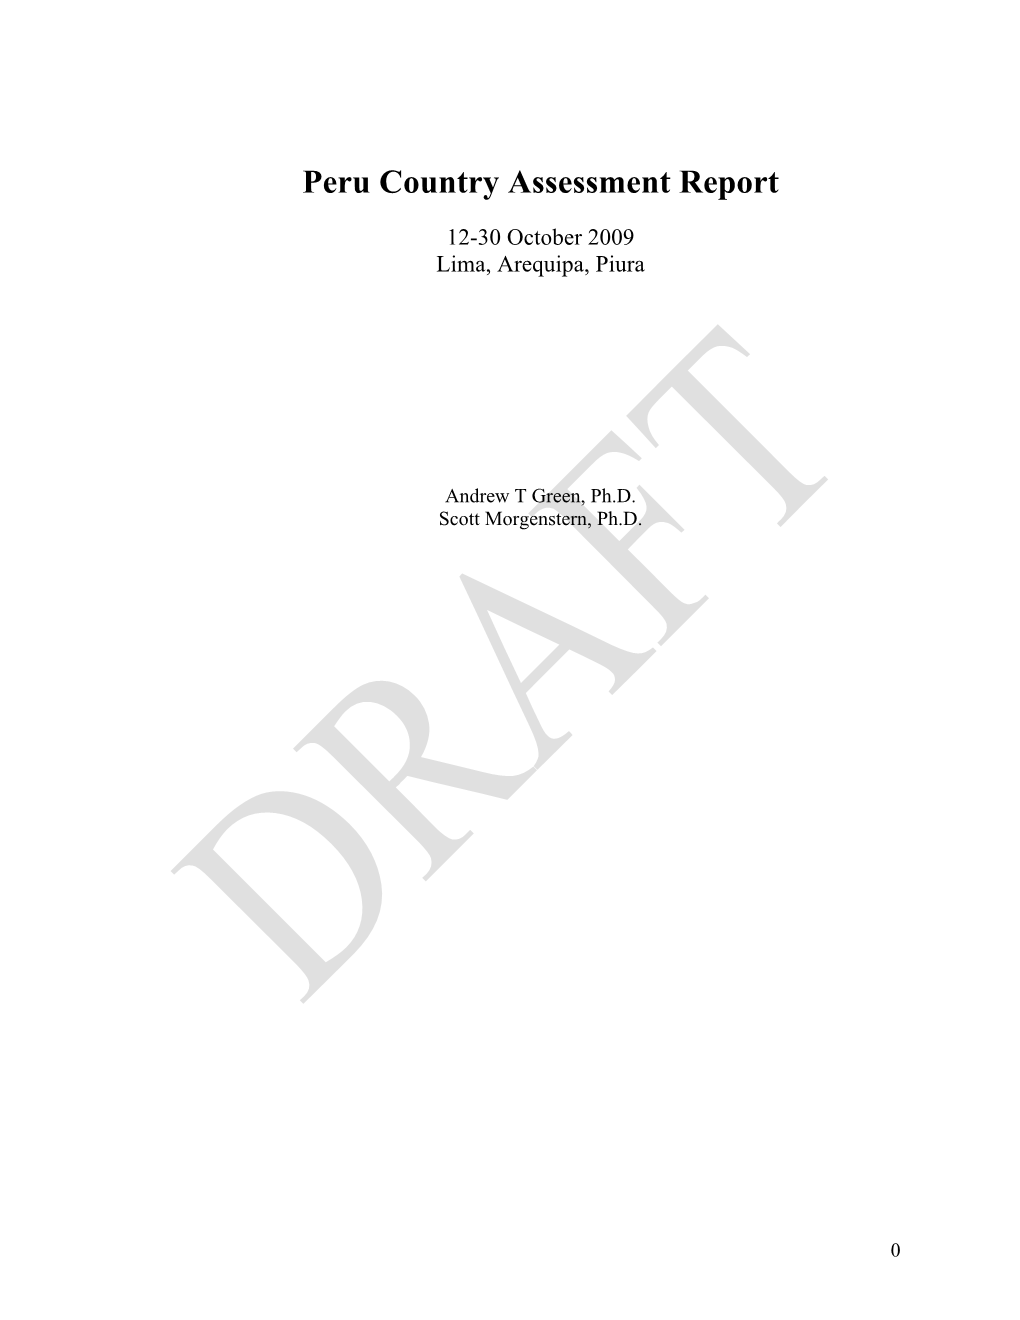 Peru Country Assessment Report 2 4 11